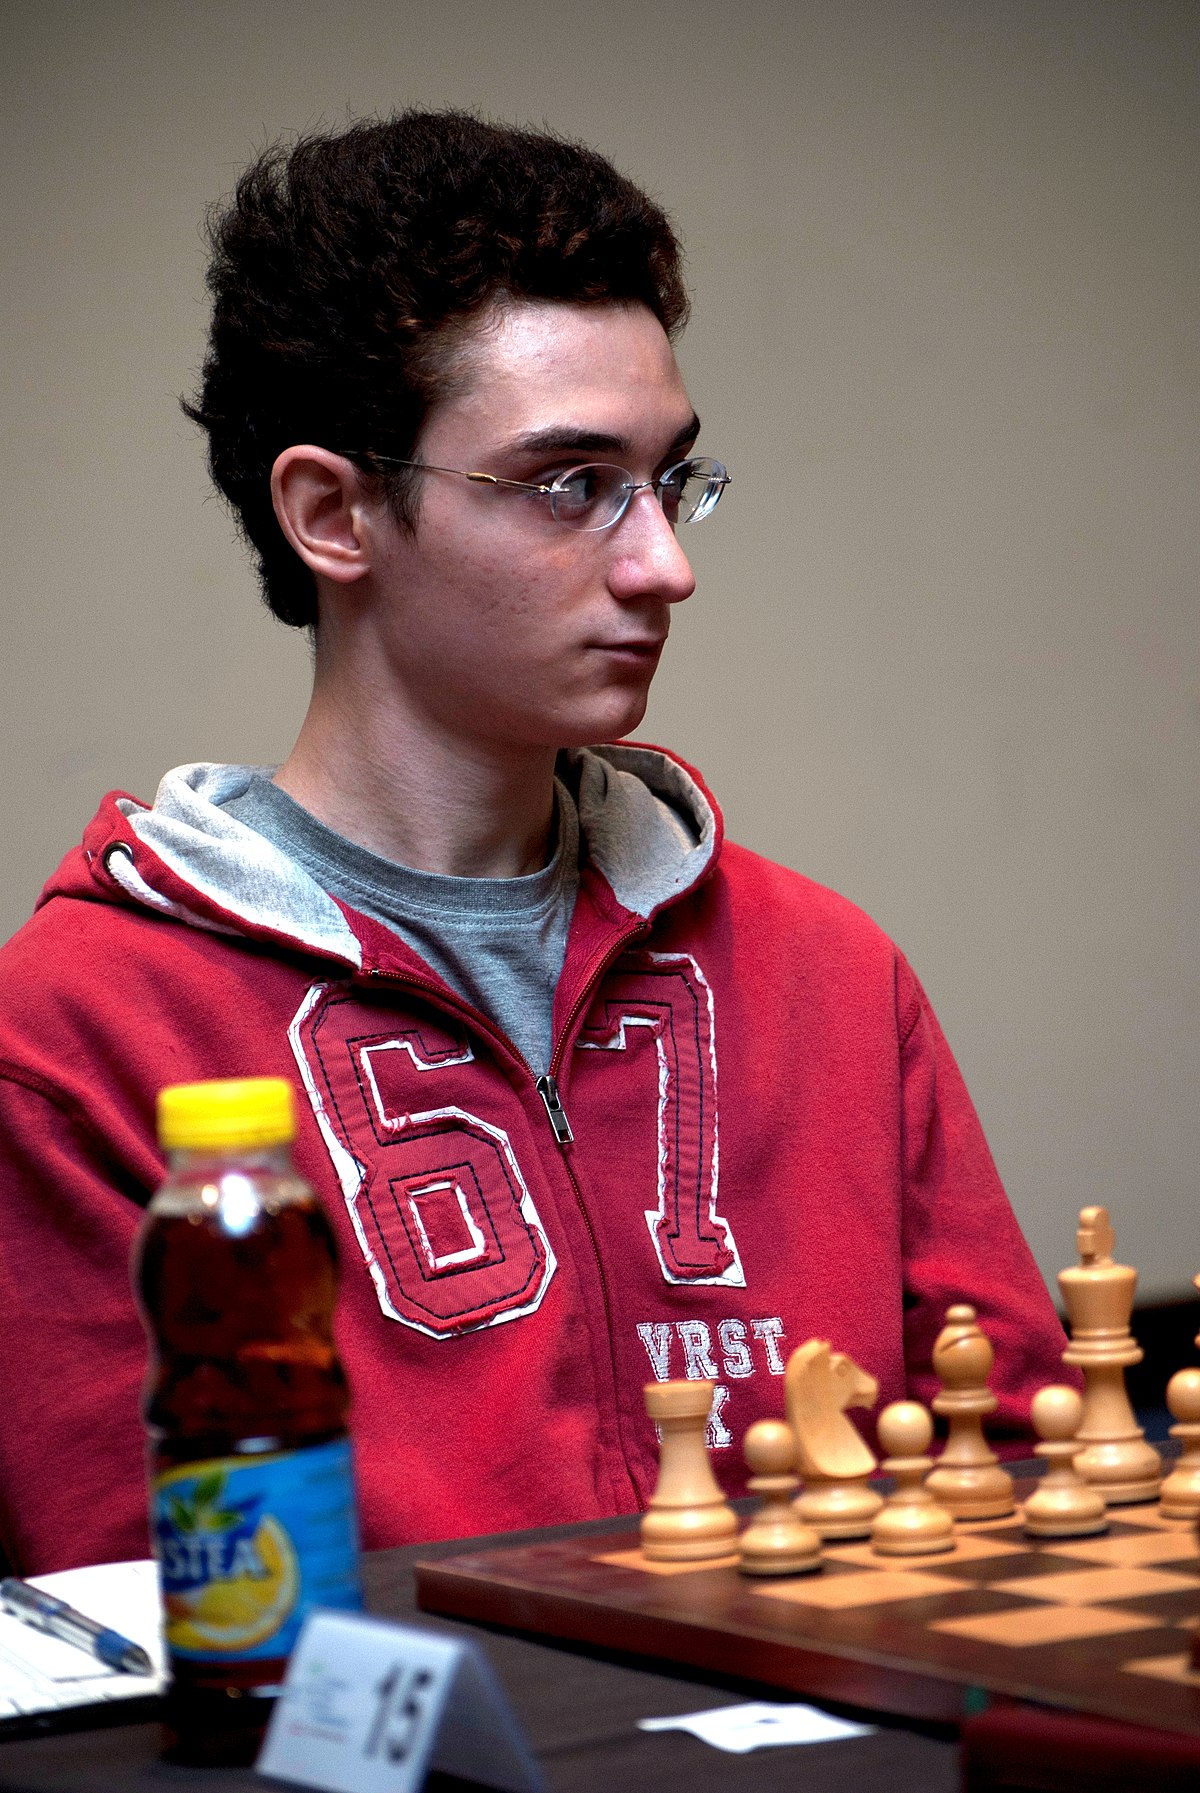 File:Caruana,Fabiano 2012 Dortmund.jpg - Wikimedia Commons